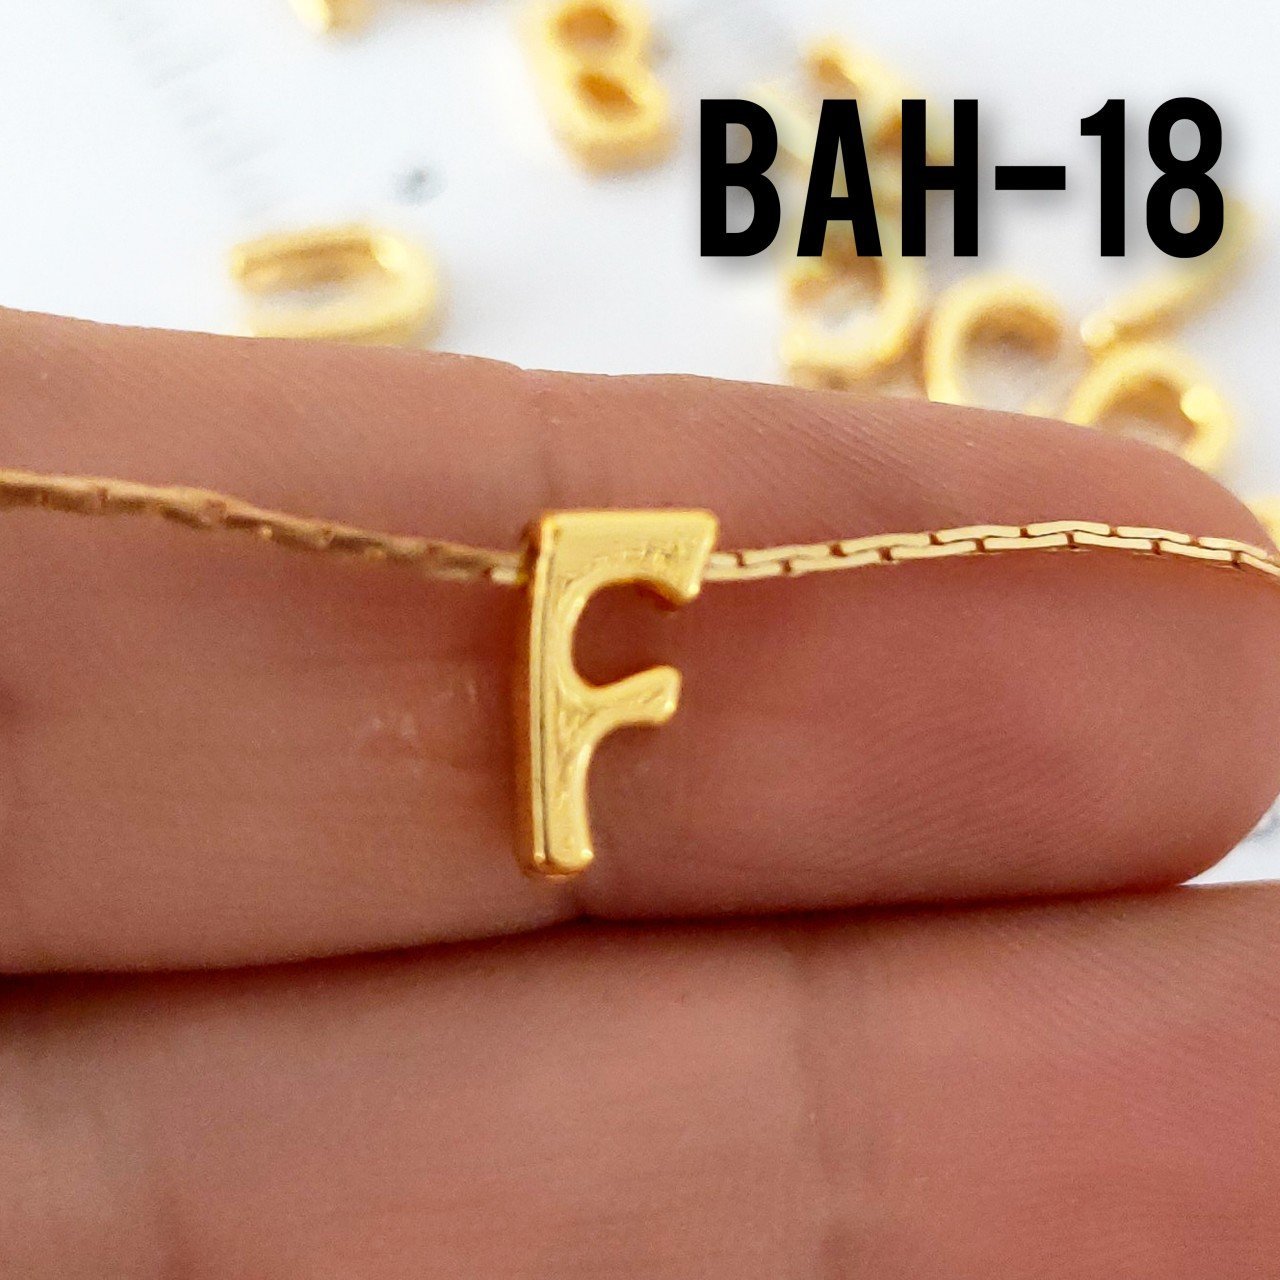 BAH-18 LAK Altın Kaplama F Harfi Boncuk